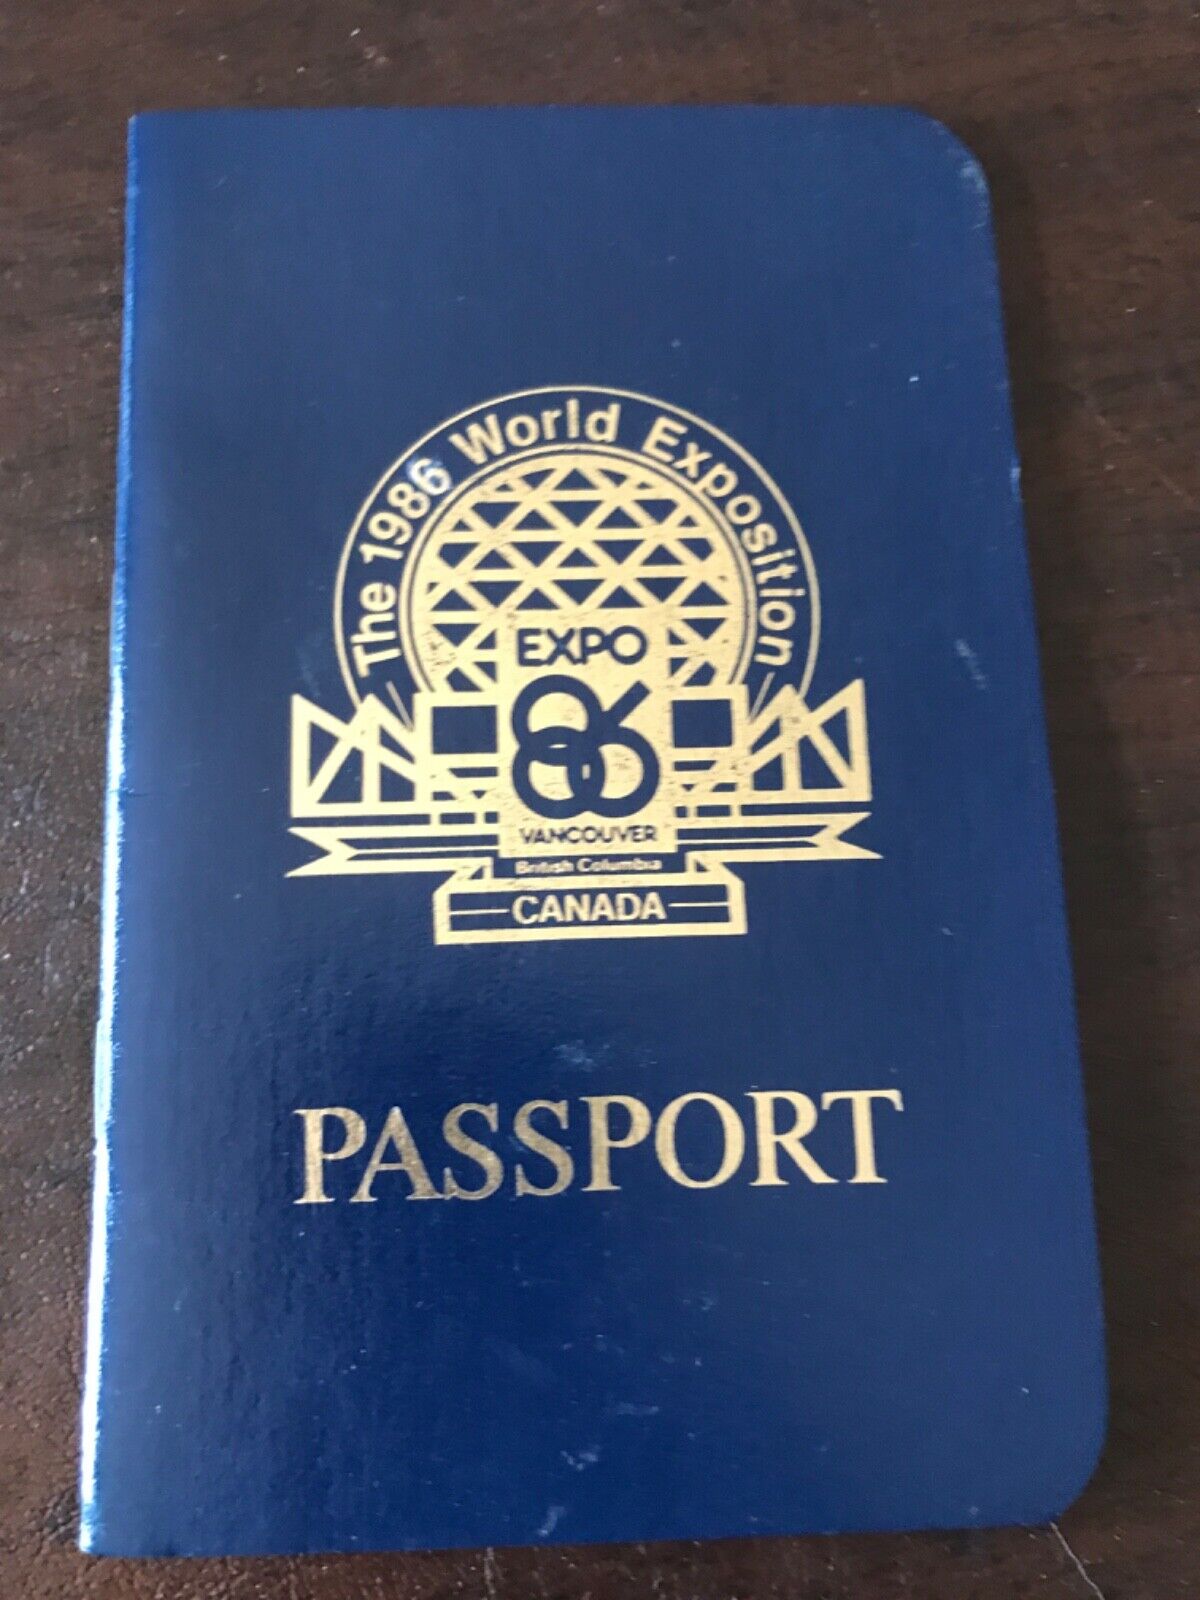 The 1986 World Exposition Vancouver British Columbia Passport Expo 86